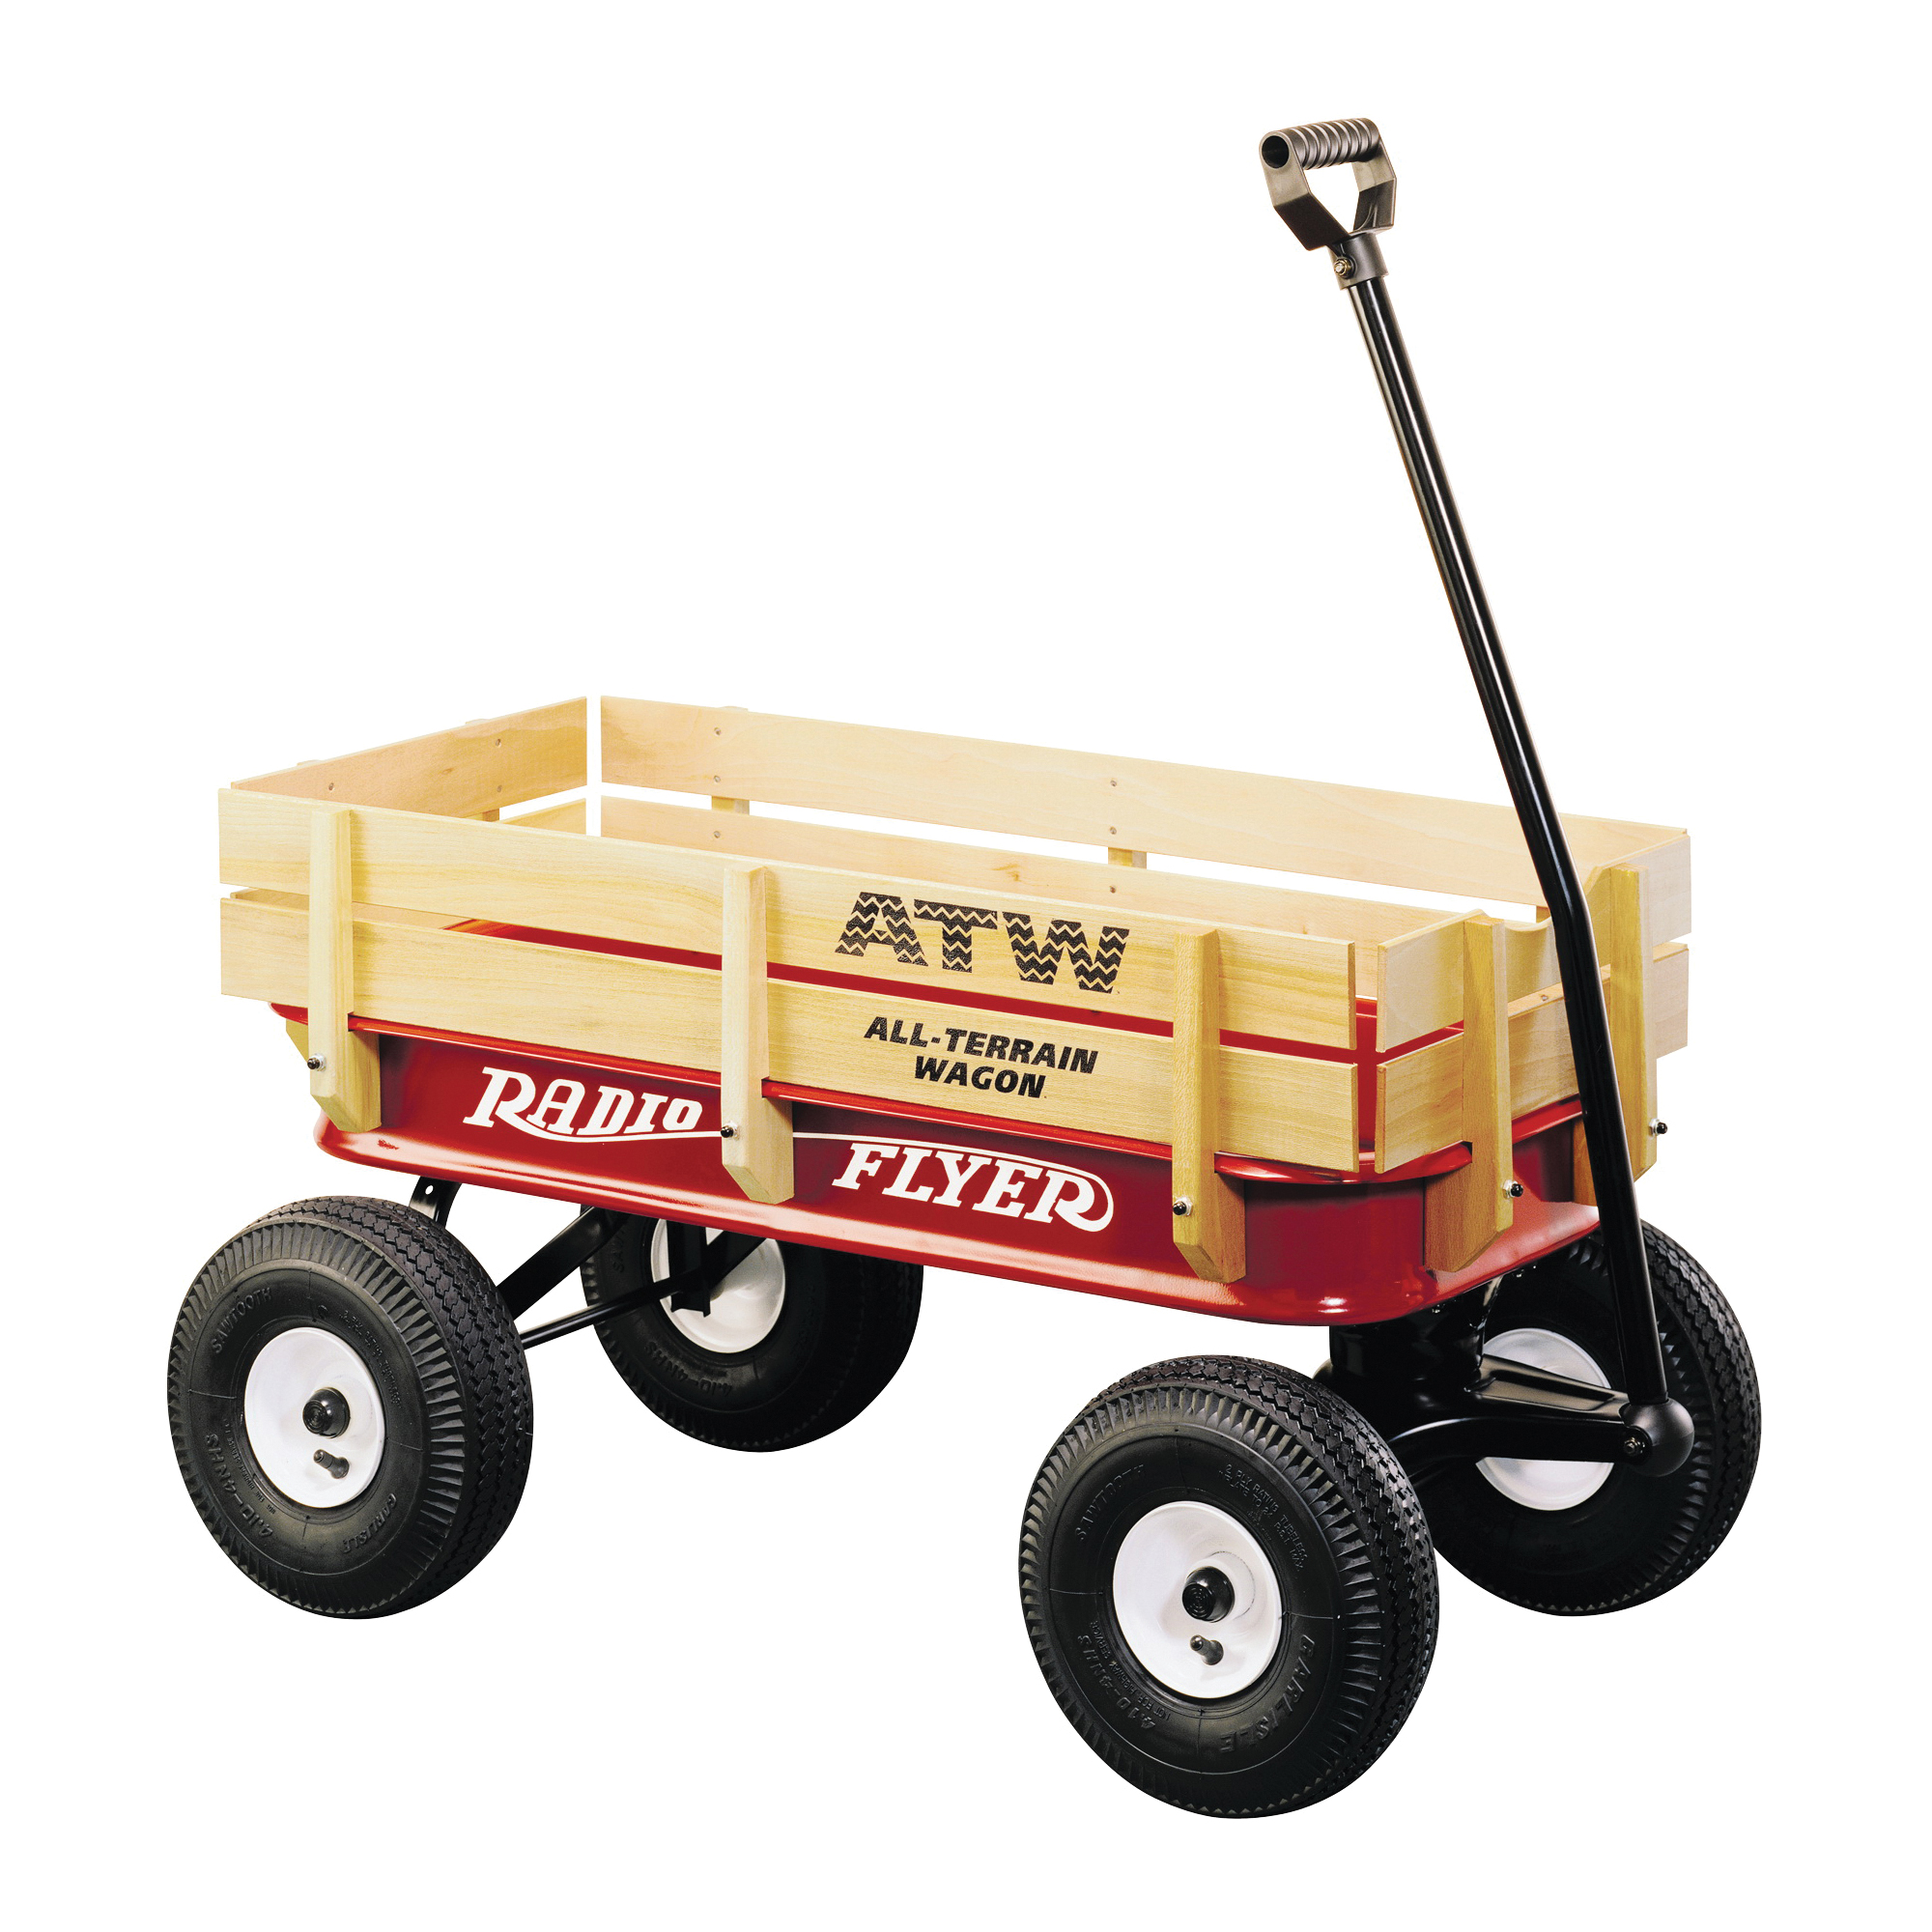 32Z Terrain Wagon, 200 lb Capacity, Steel/Wood, Red, Pneumatic Wheel